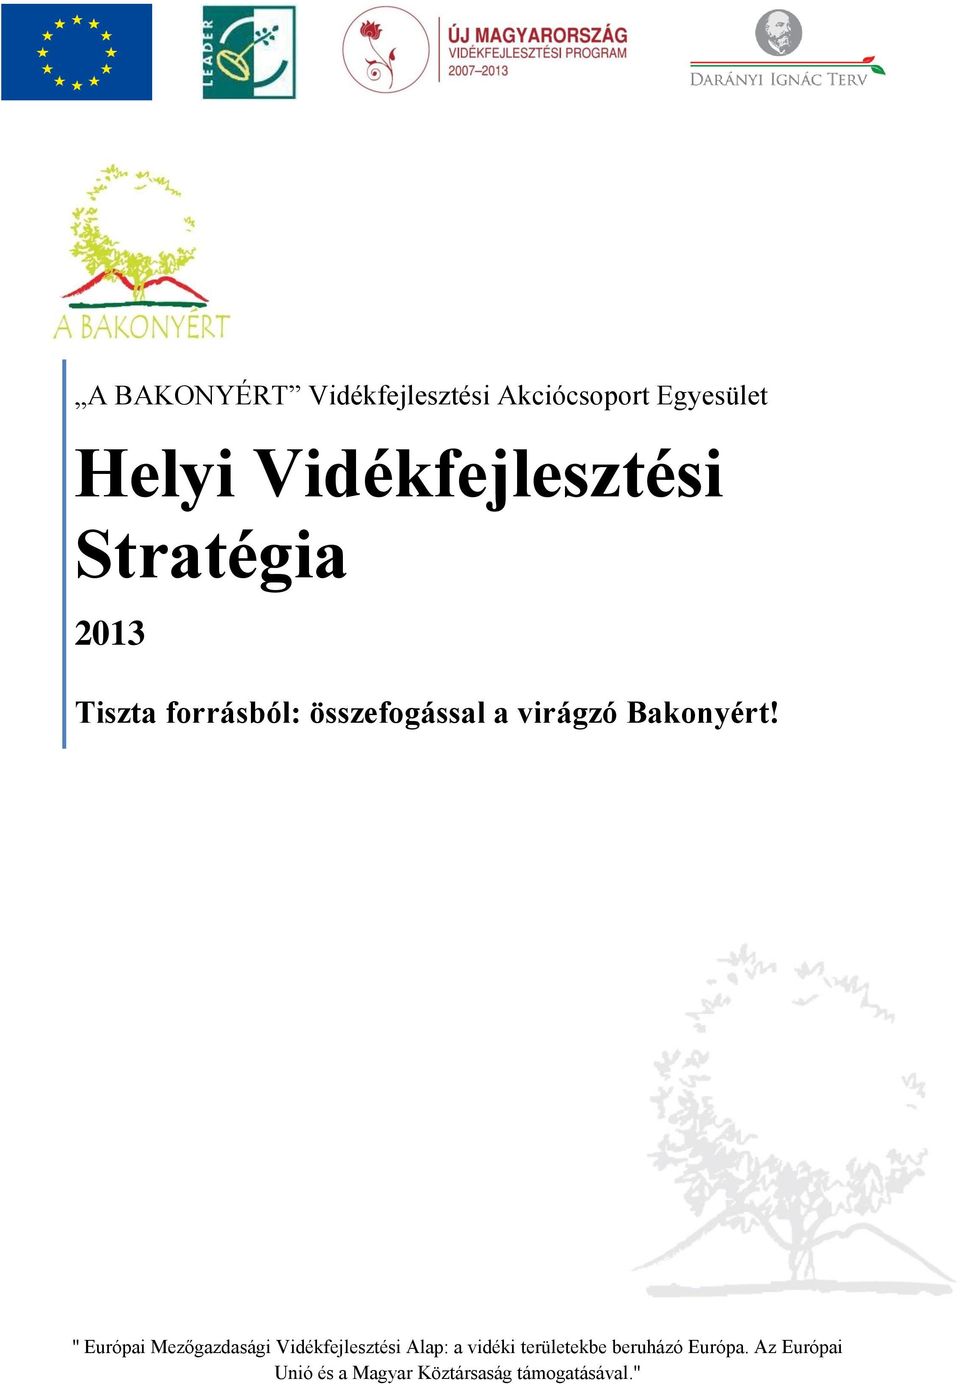 Vidékfejlesztési Stratégia 2013